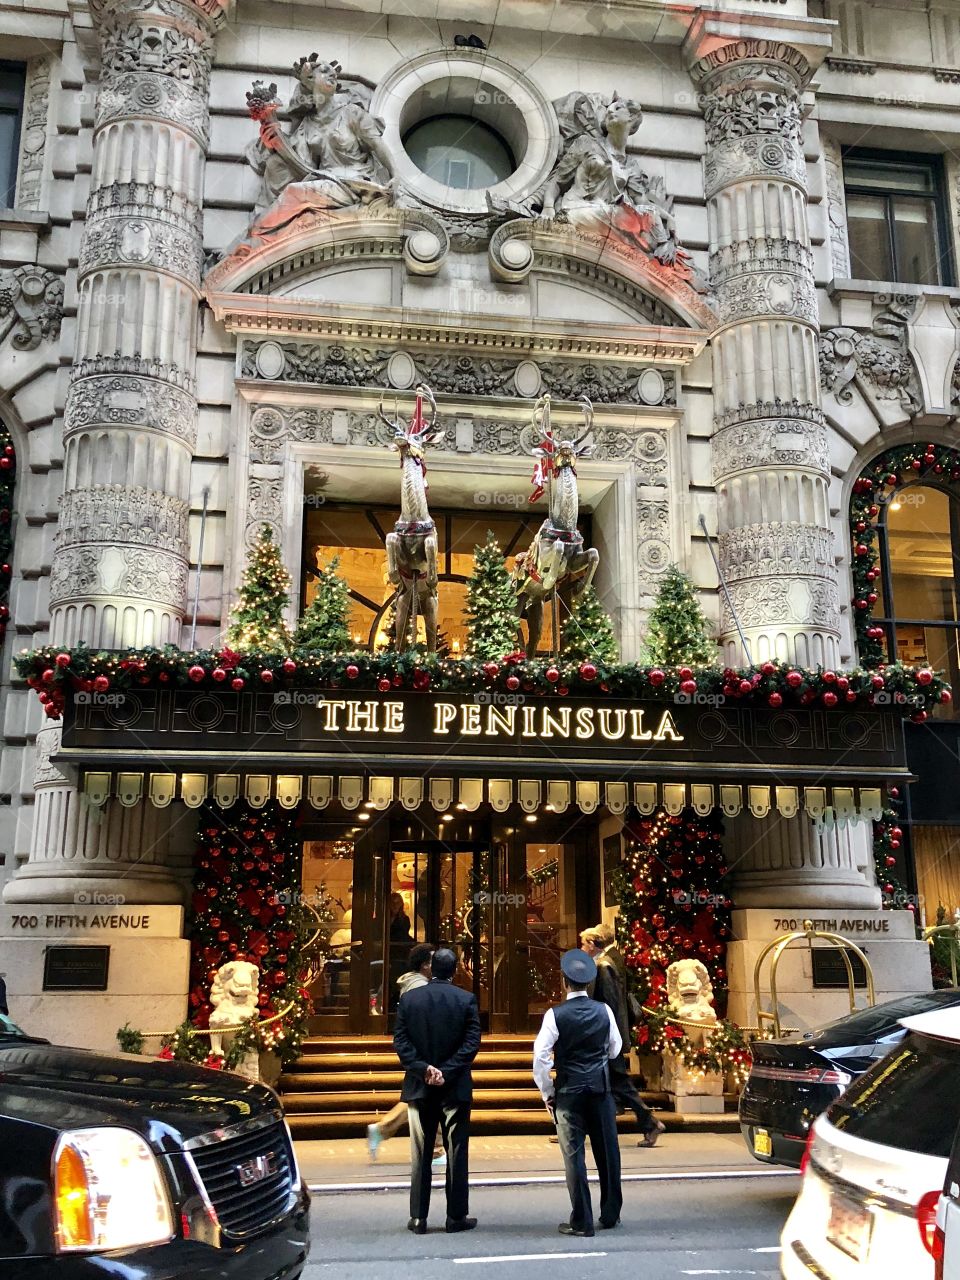 The Peninsula hotel in NYC